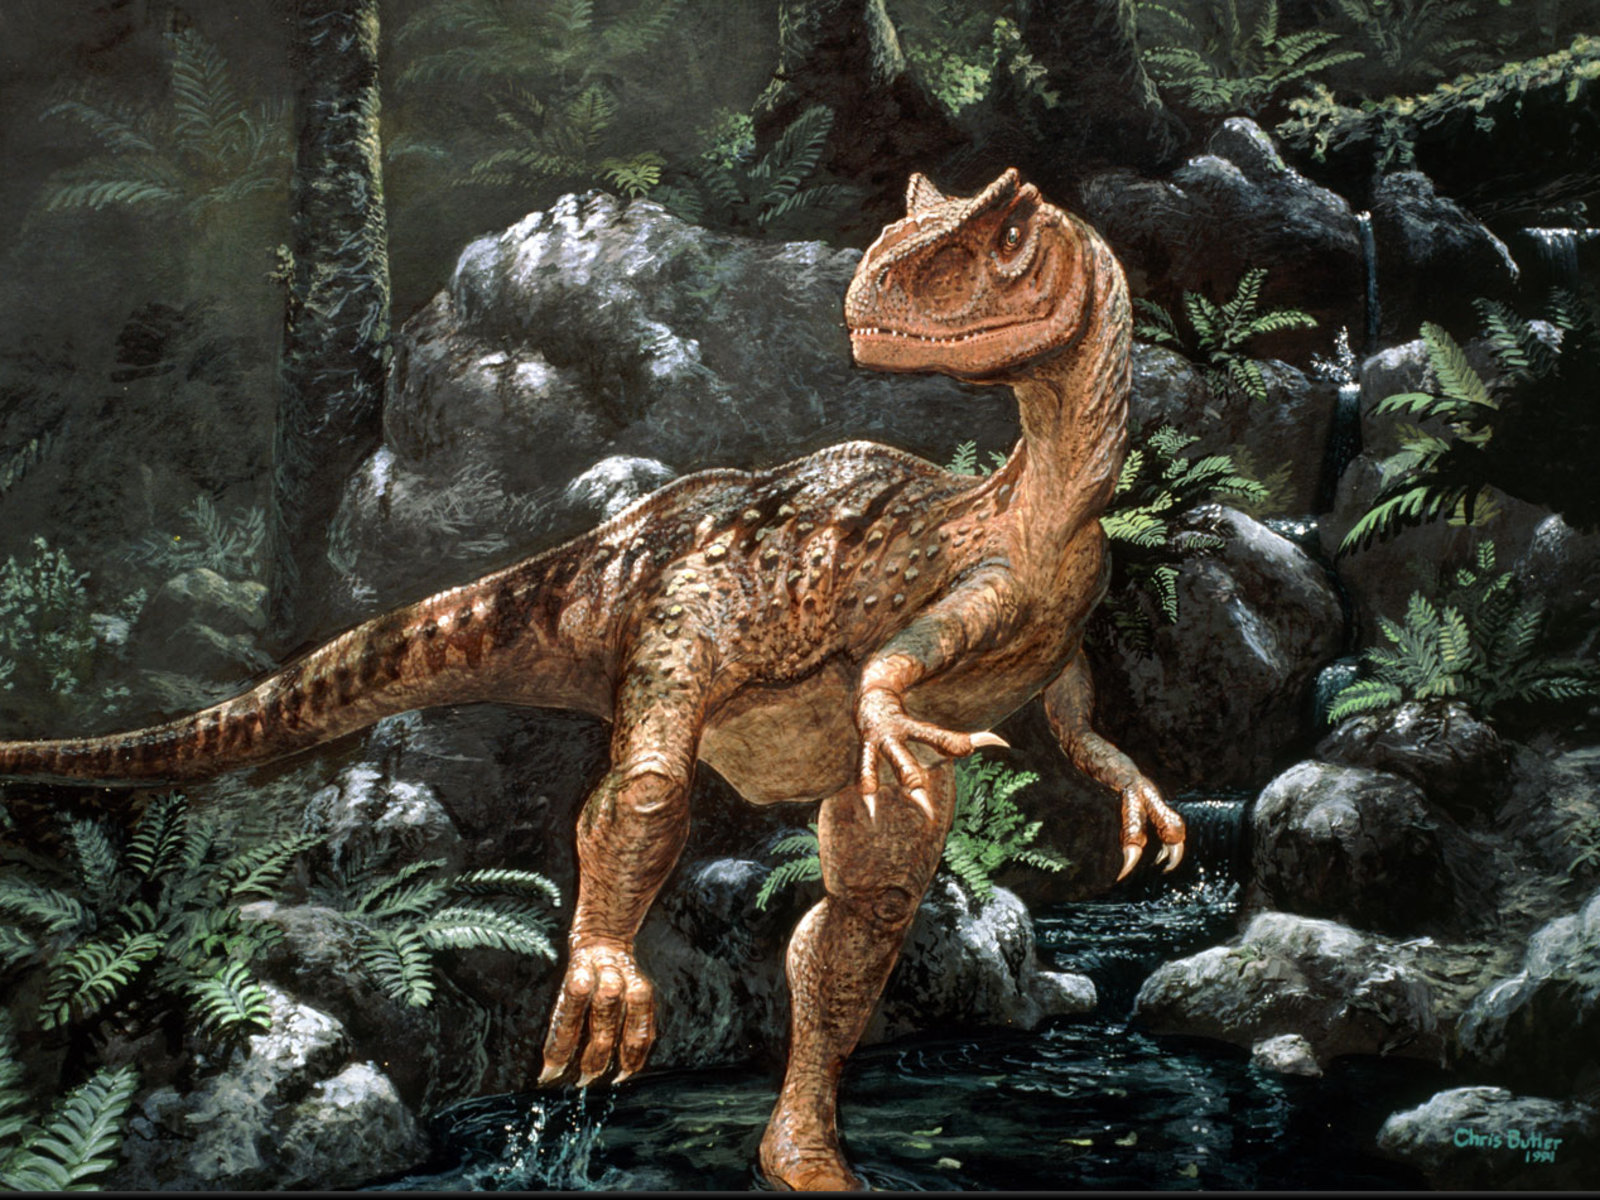 A majestic dinosaur roams in a vibrant natural landscape.